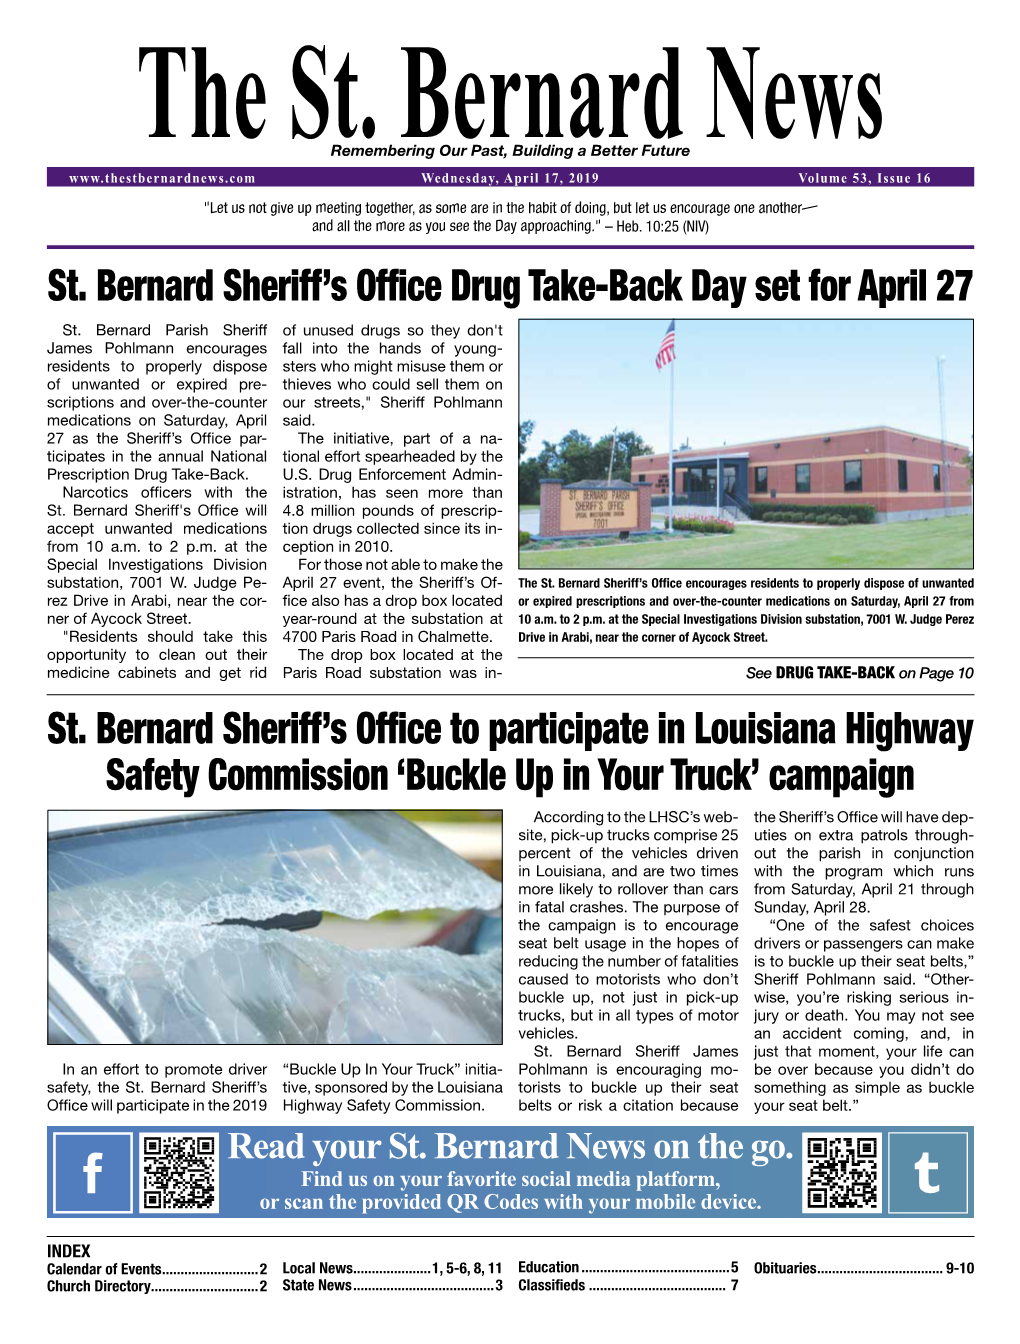 St. Bernard Sheriff's Office Drug Take-Back Day Set for April 27 St